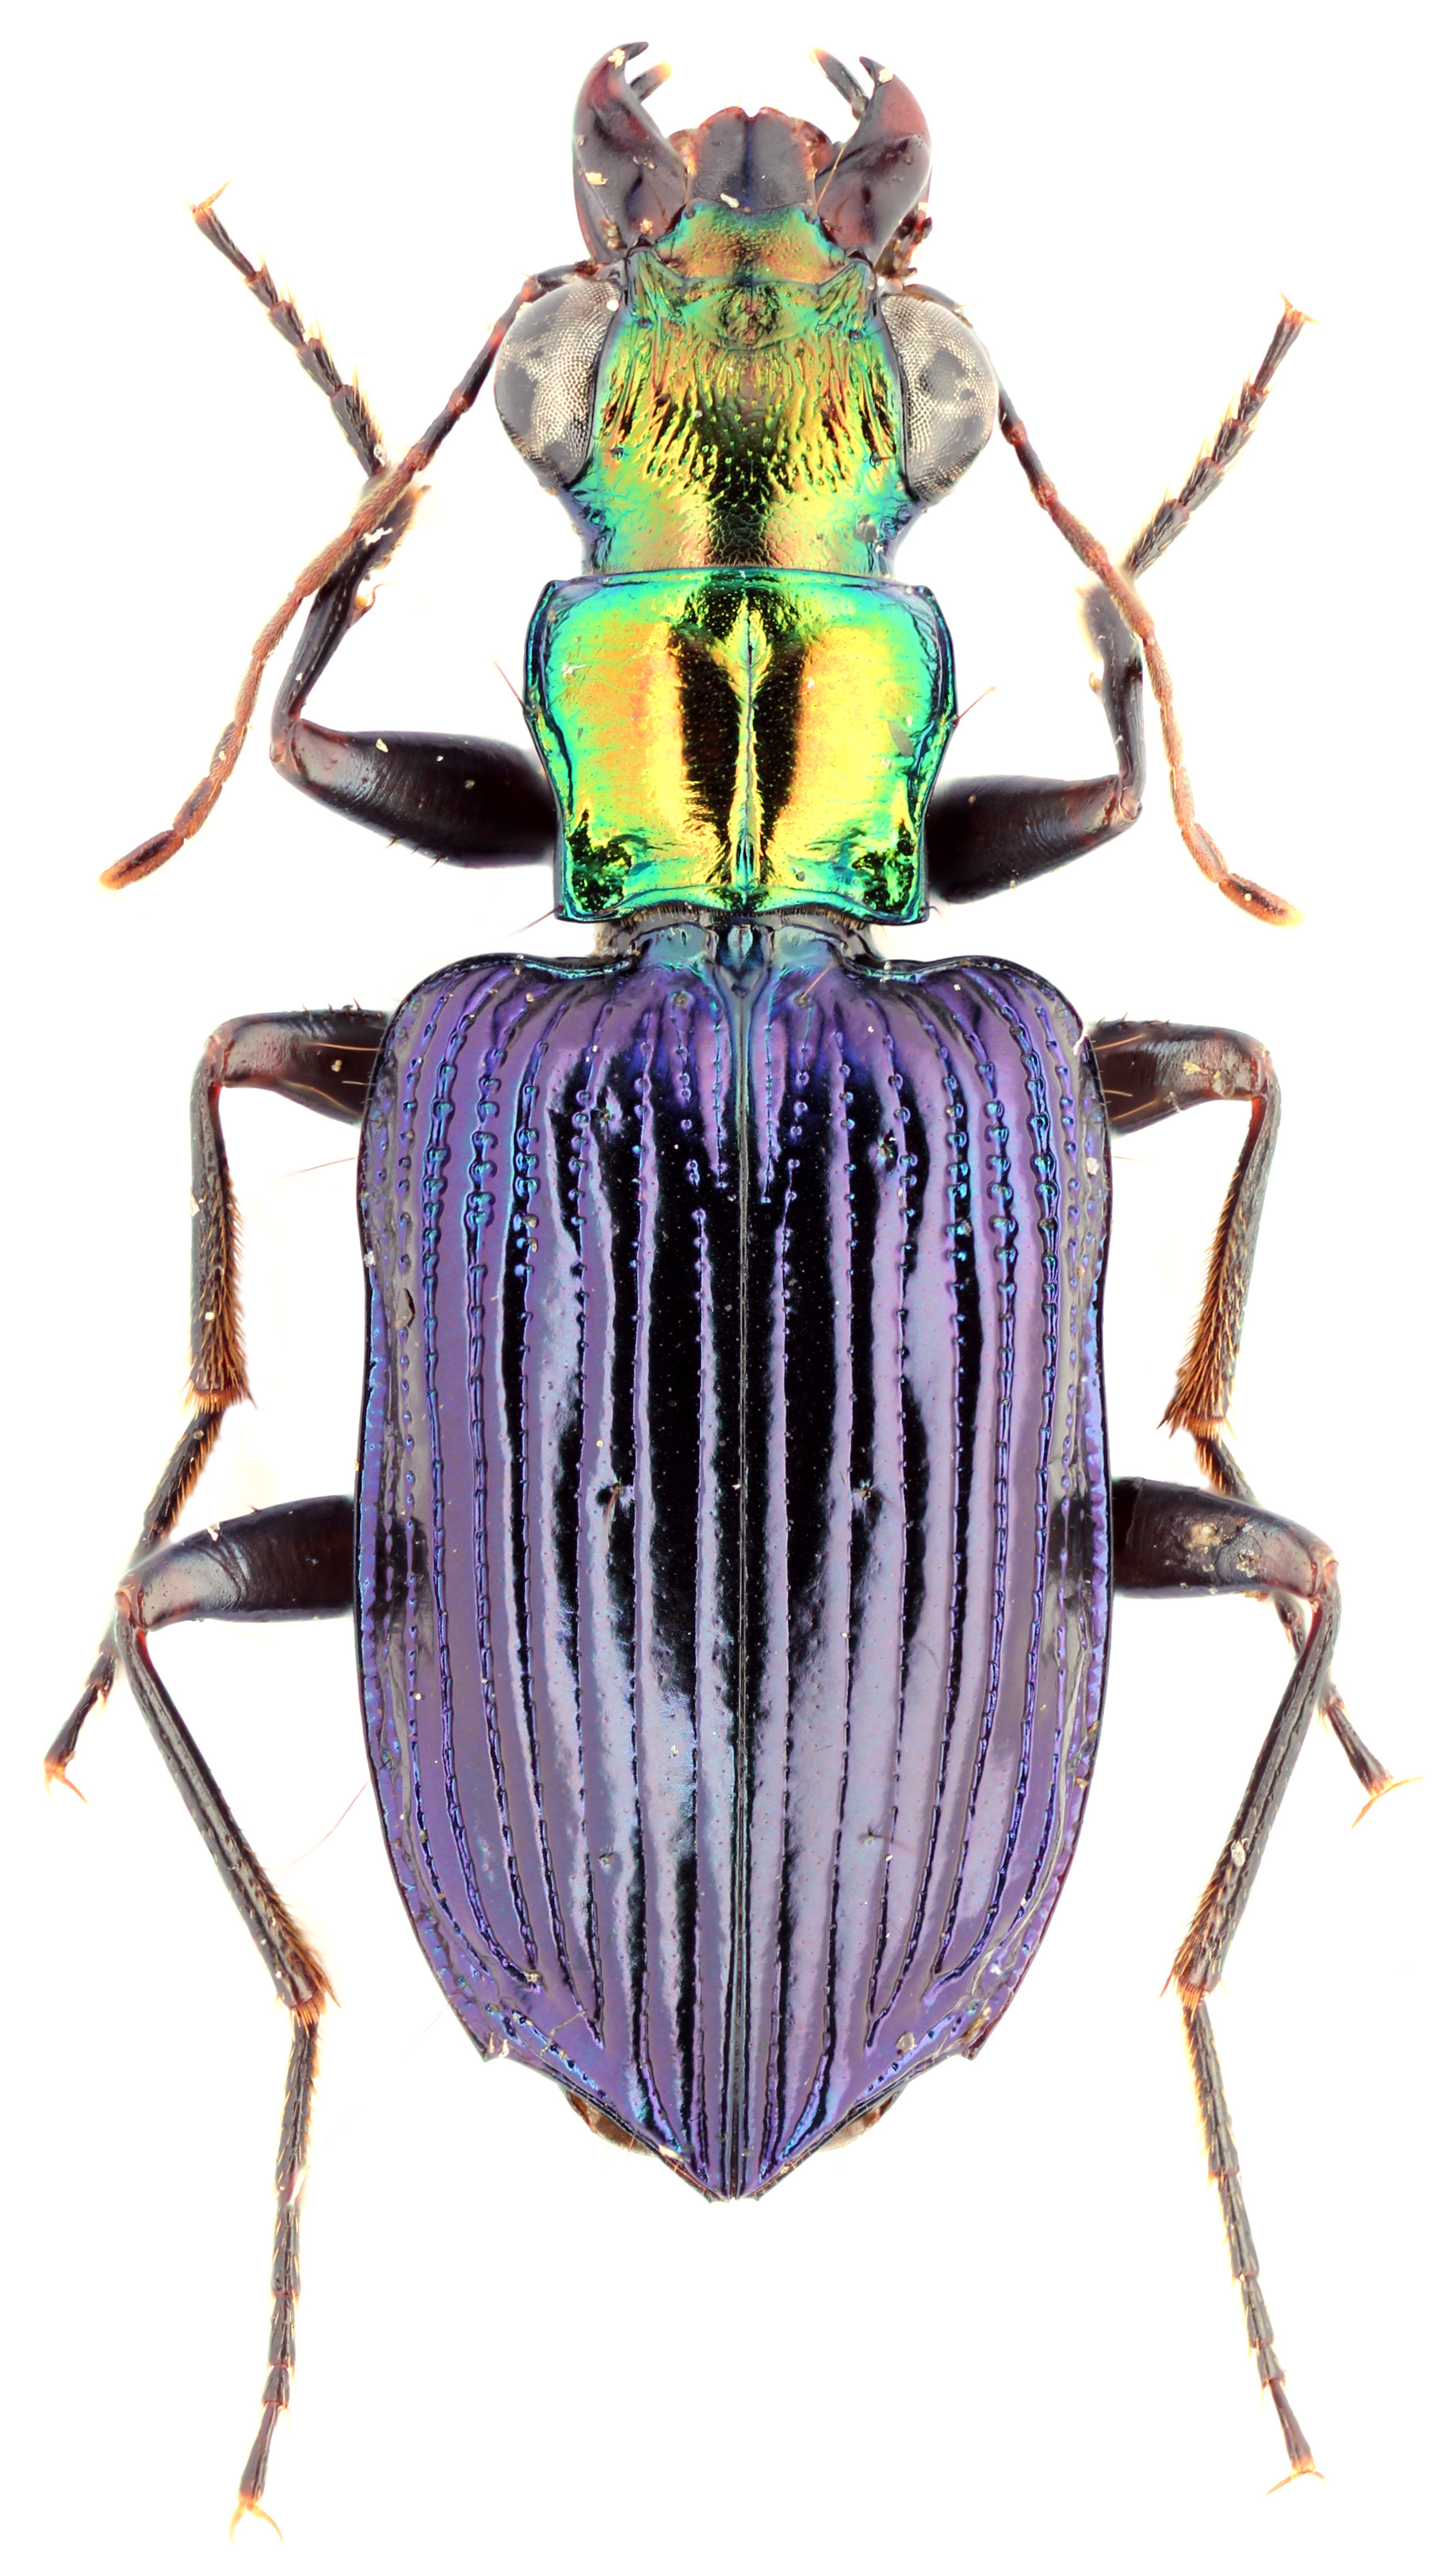 Genus Catascopus Kirby, 1825a: 94 - Carabidae